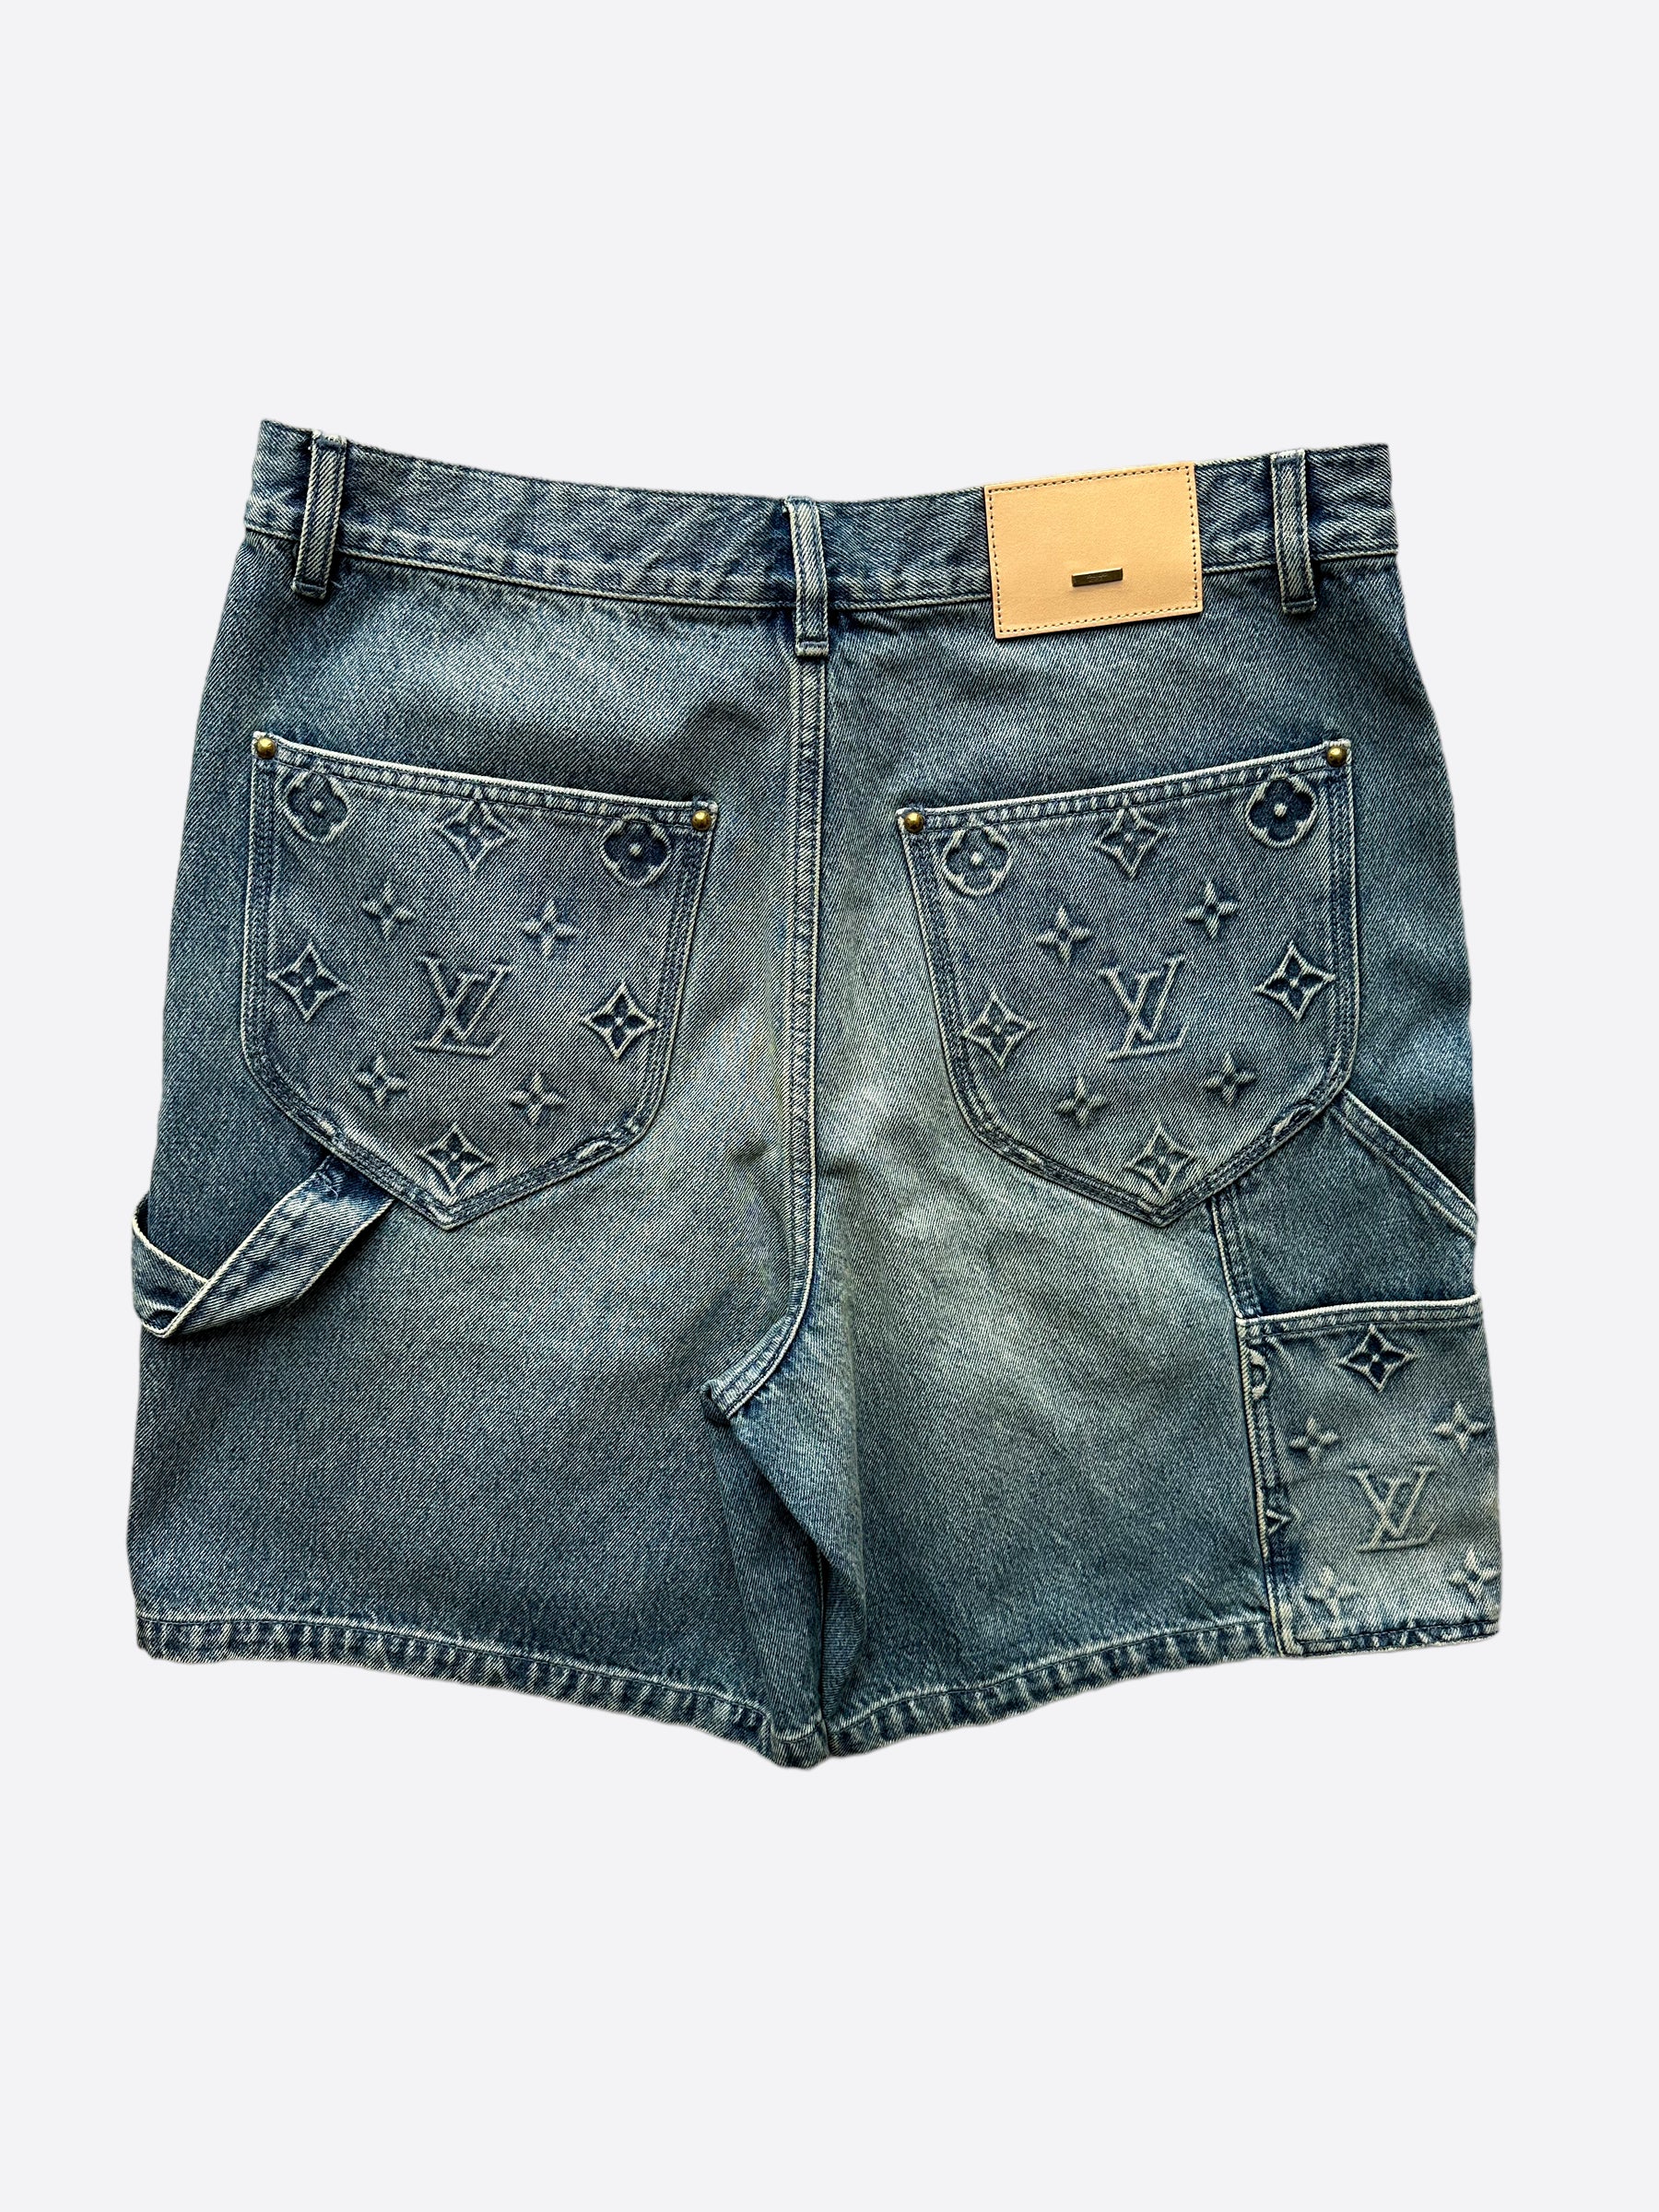 Coco - LV Denim Shorts